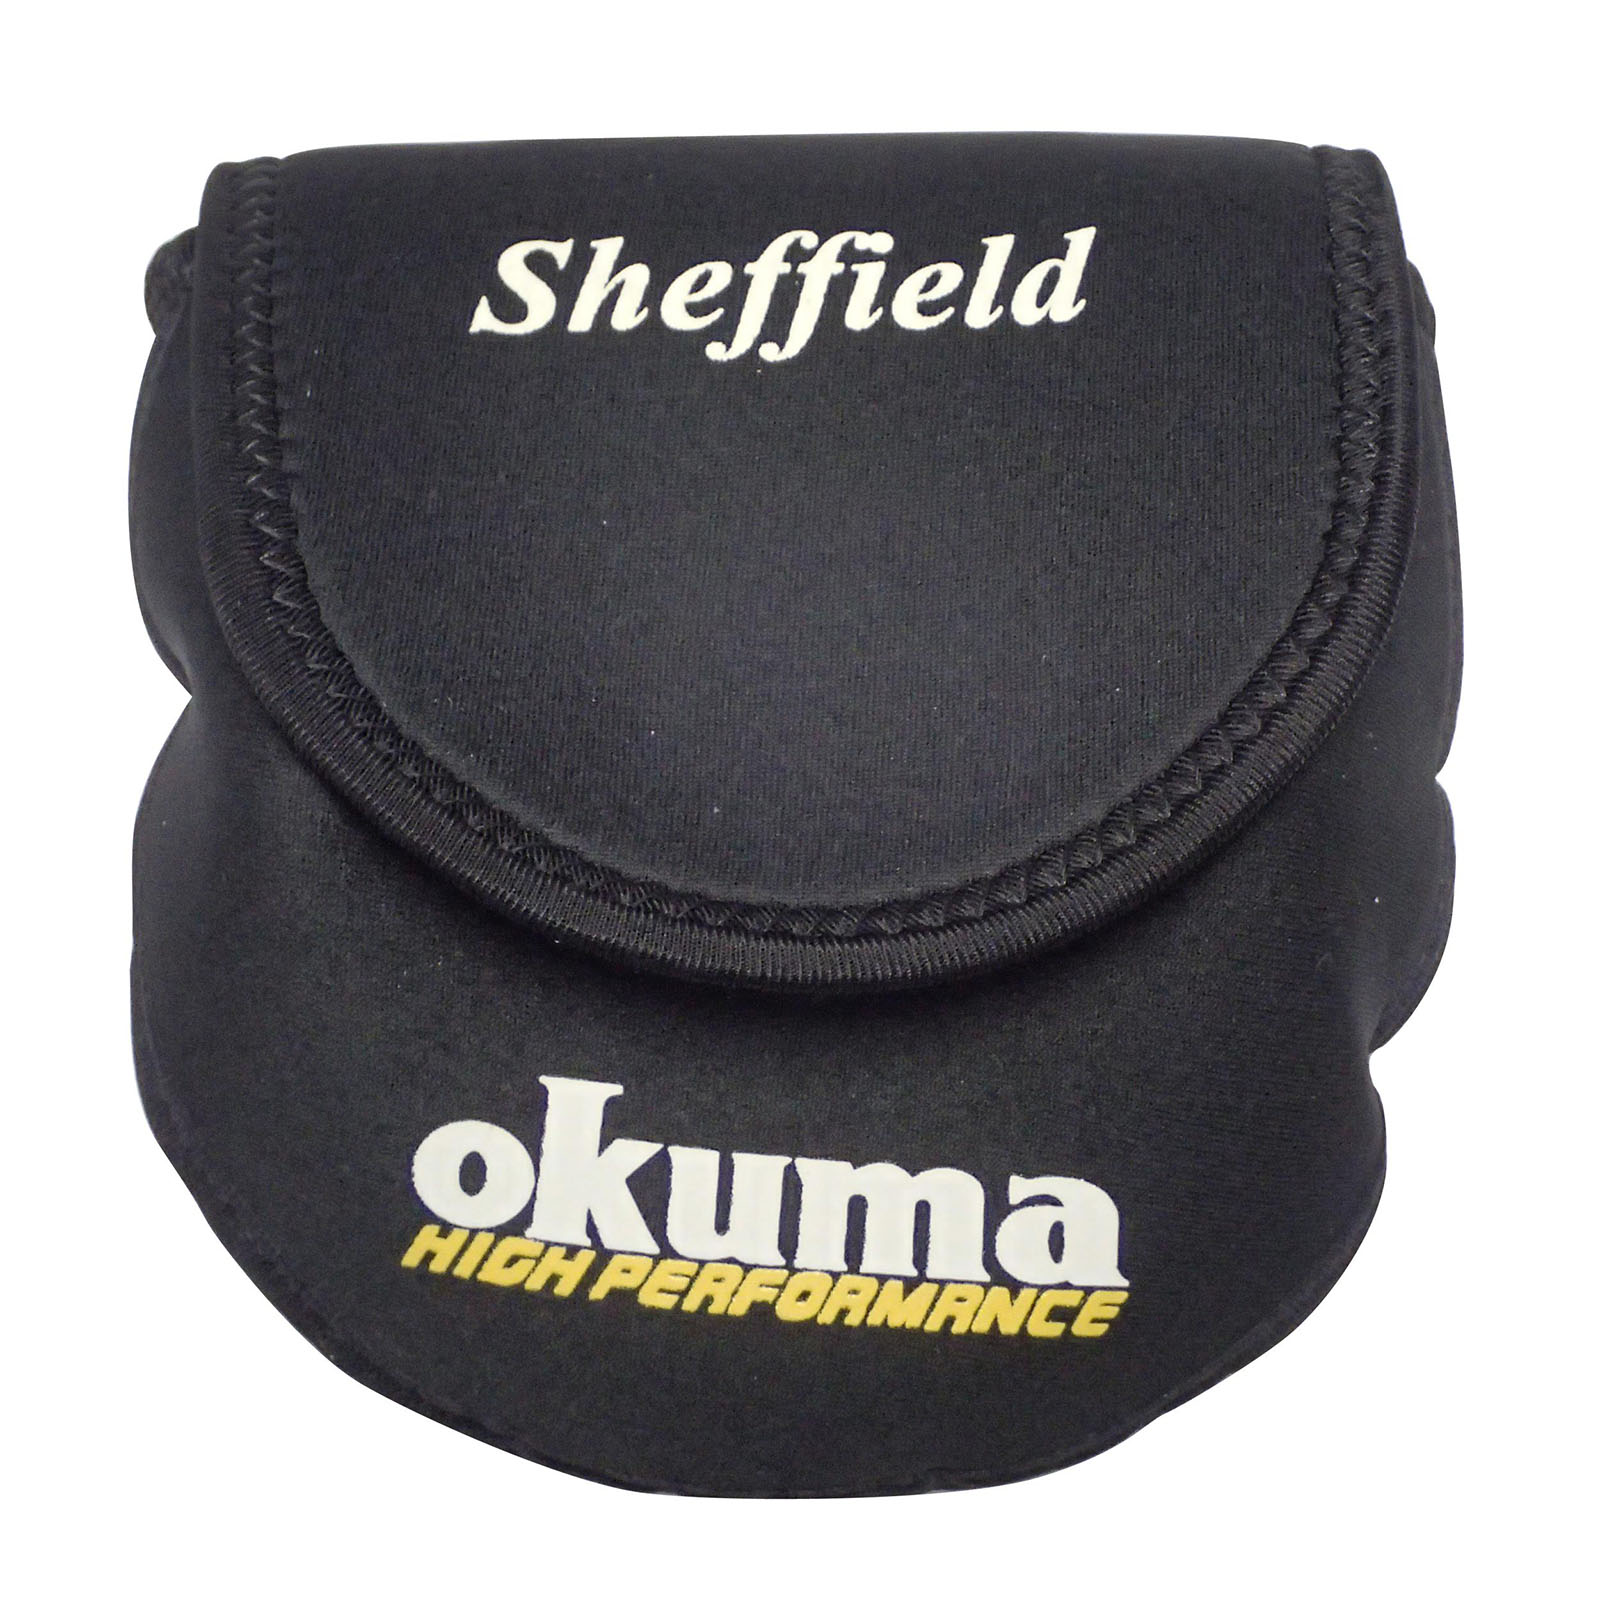 OKUMA FISHING TACKLE CORP. Sheffield Okuma S1002 Series Centerpin